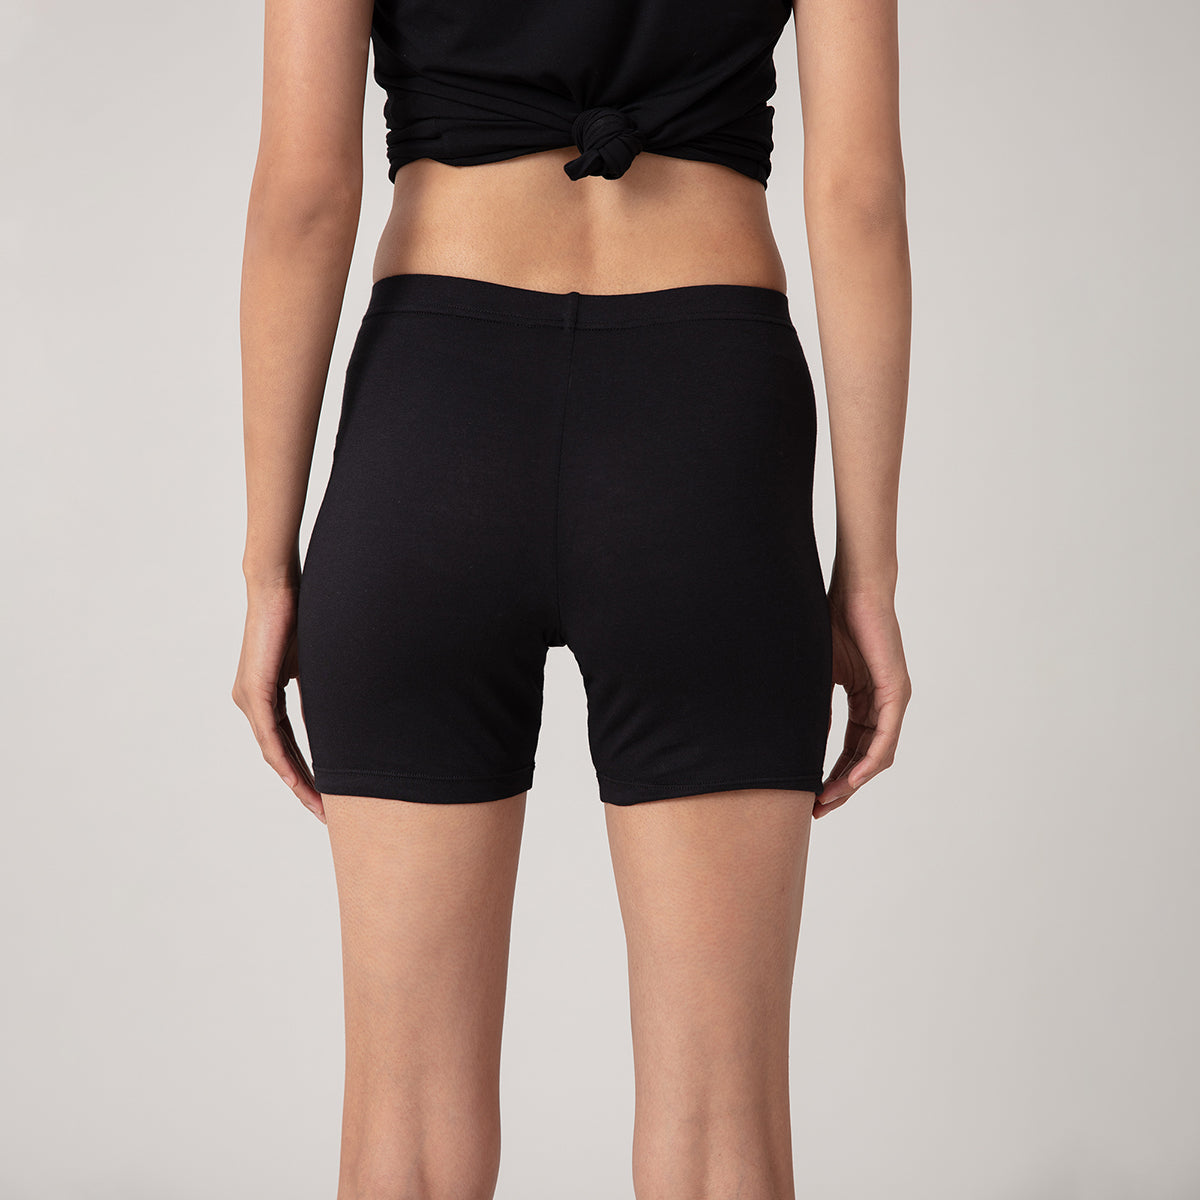 Nykd by Nykaa Stretch cotton cycling shorts - Black NYP083